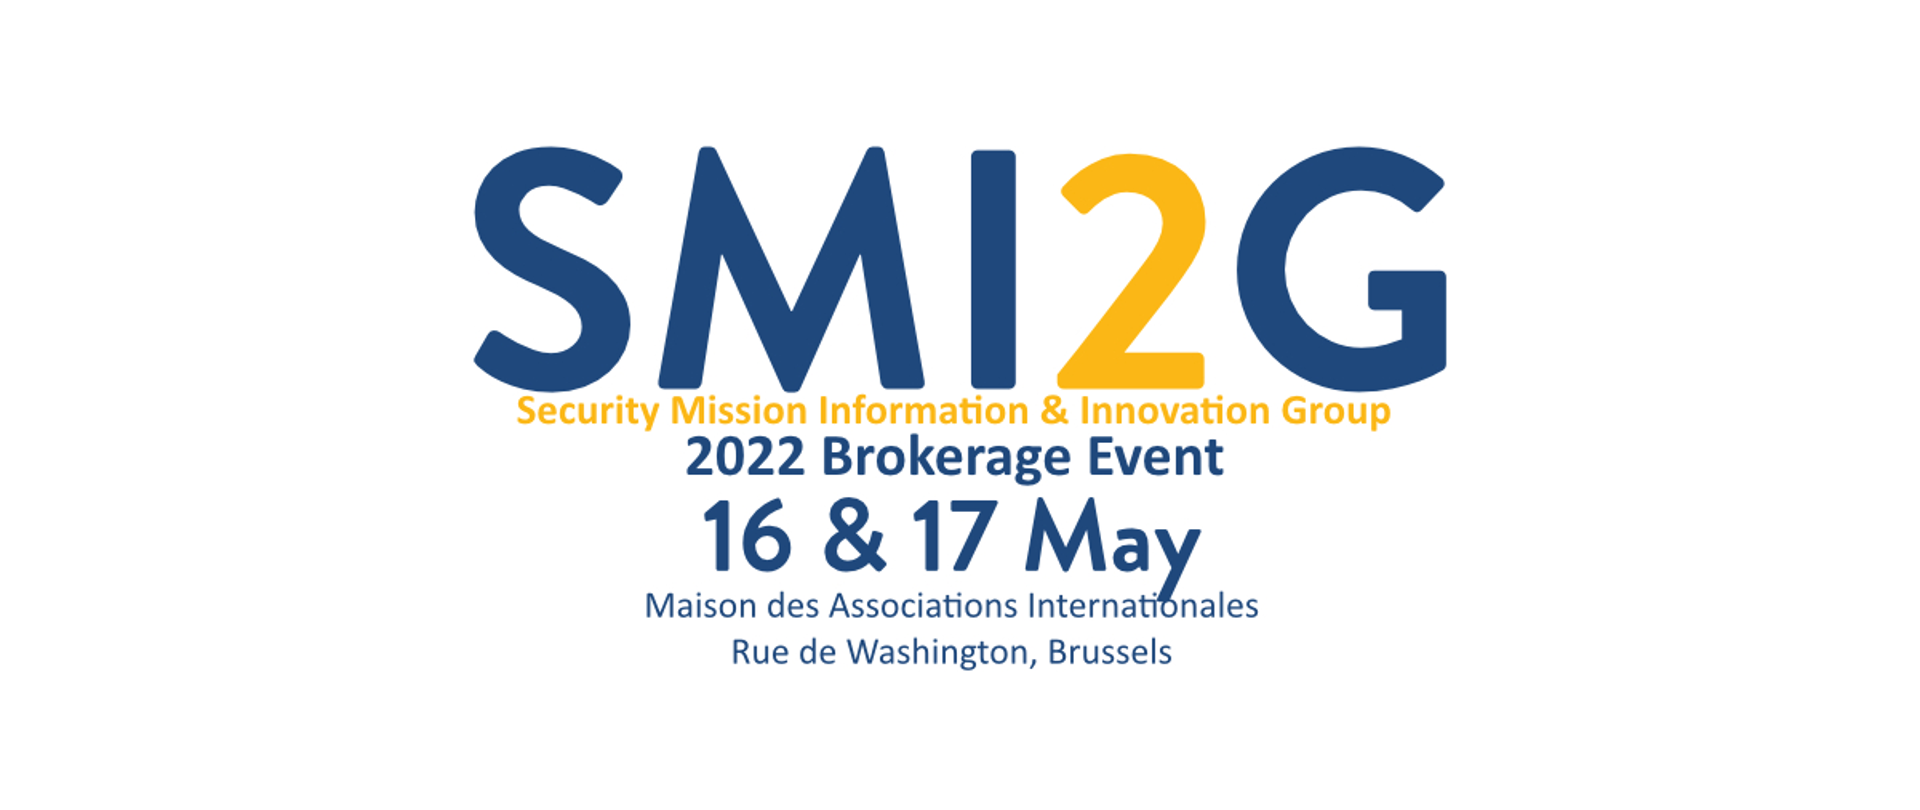 SMI2G
Security Mission Information & Innovation Group
2022 Brokerage Event
16 & 17 May
Maison des Associations Internationales
Rue de Washington, Brussels